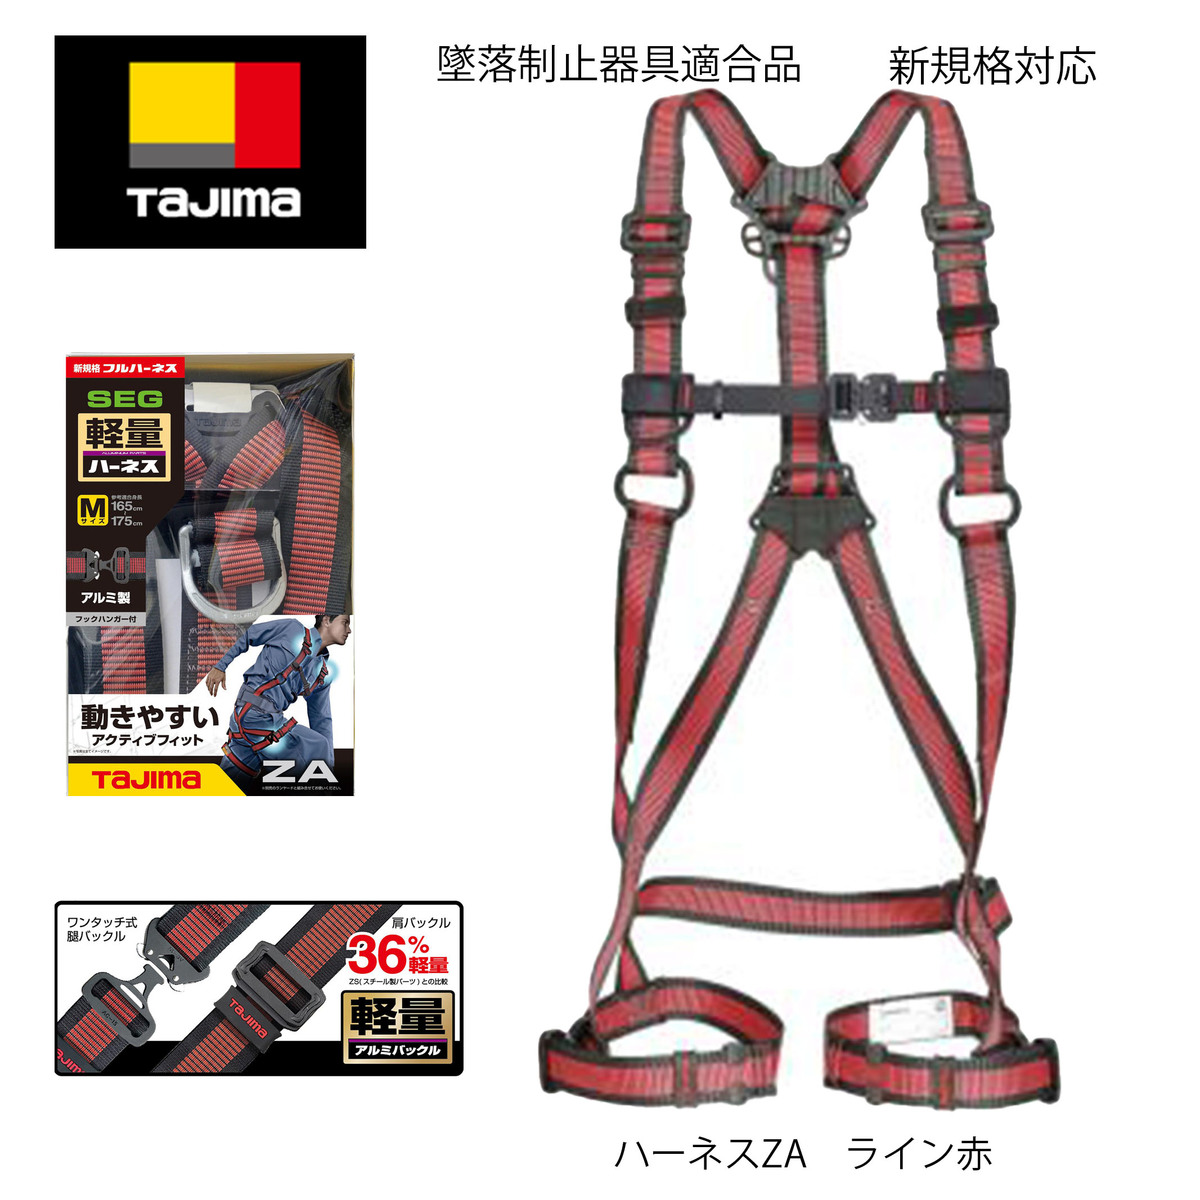 【楽天市場】【新規格適合商品】Tajima タジマ 墜落制止用器具 フル